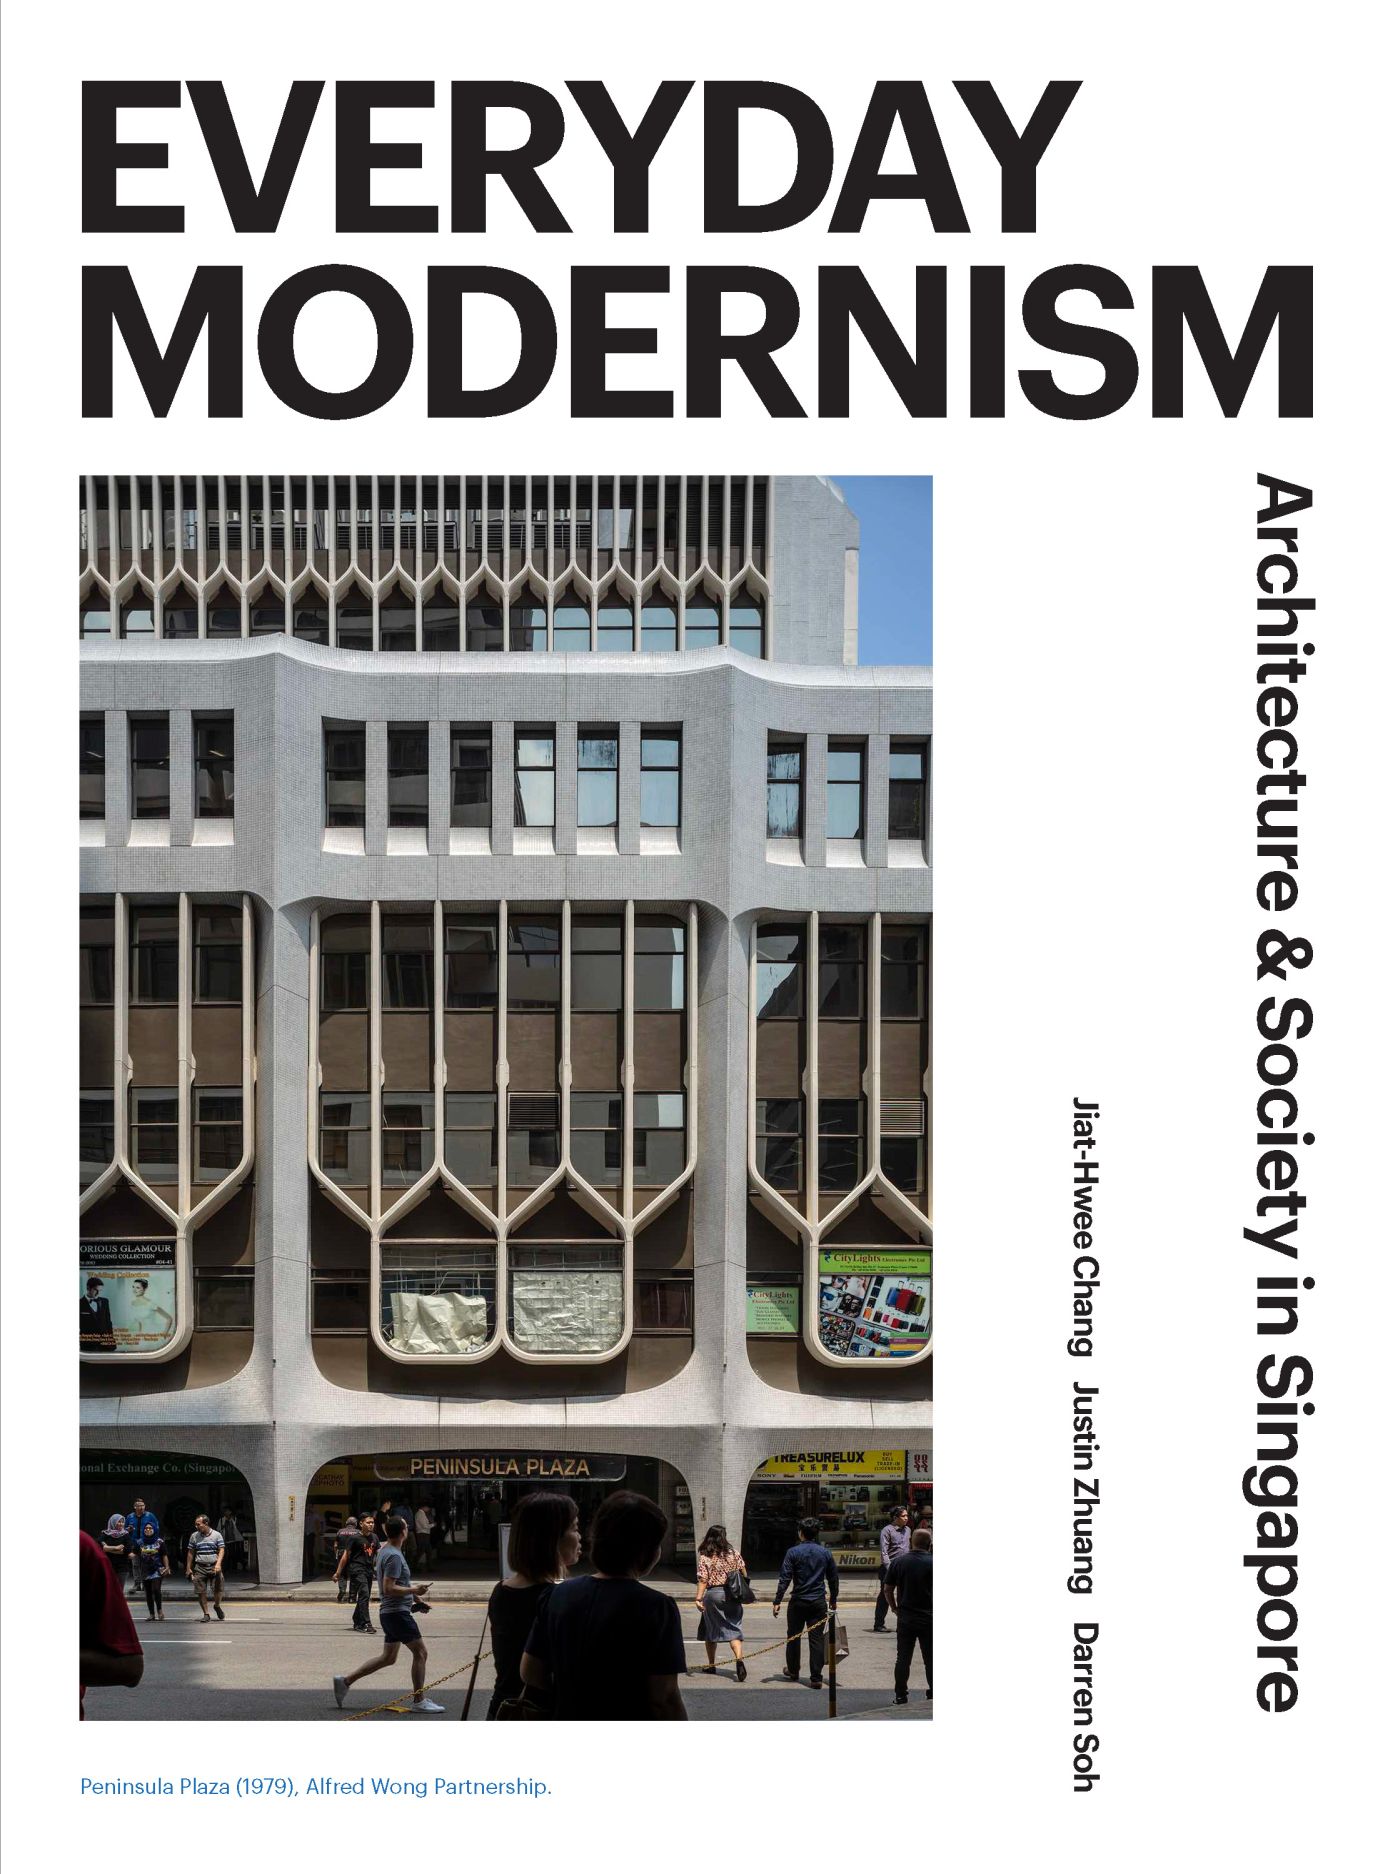 Everyday Modernism